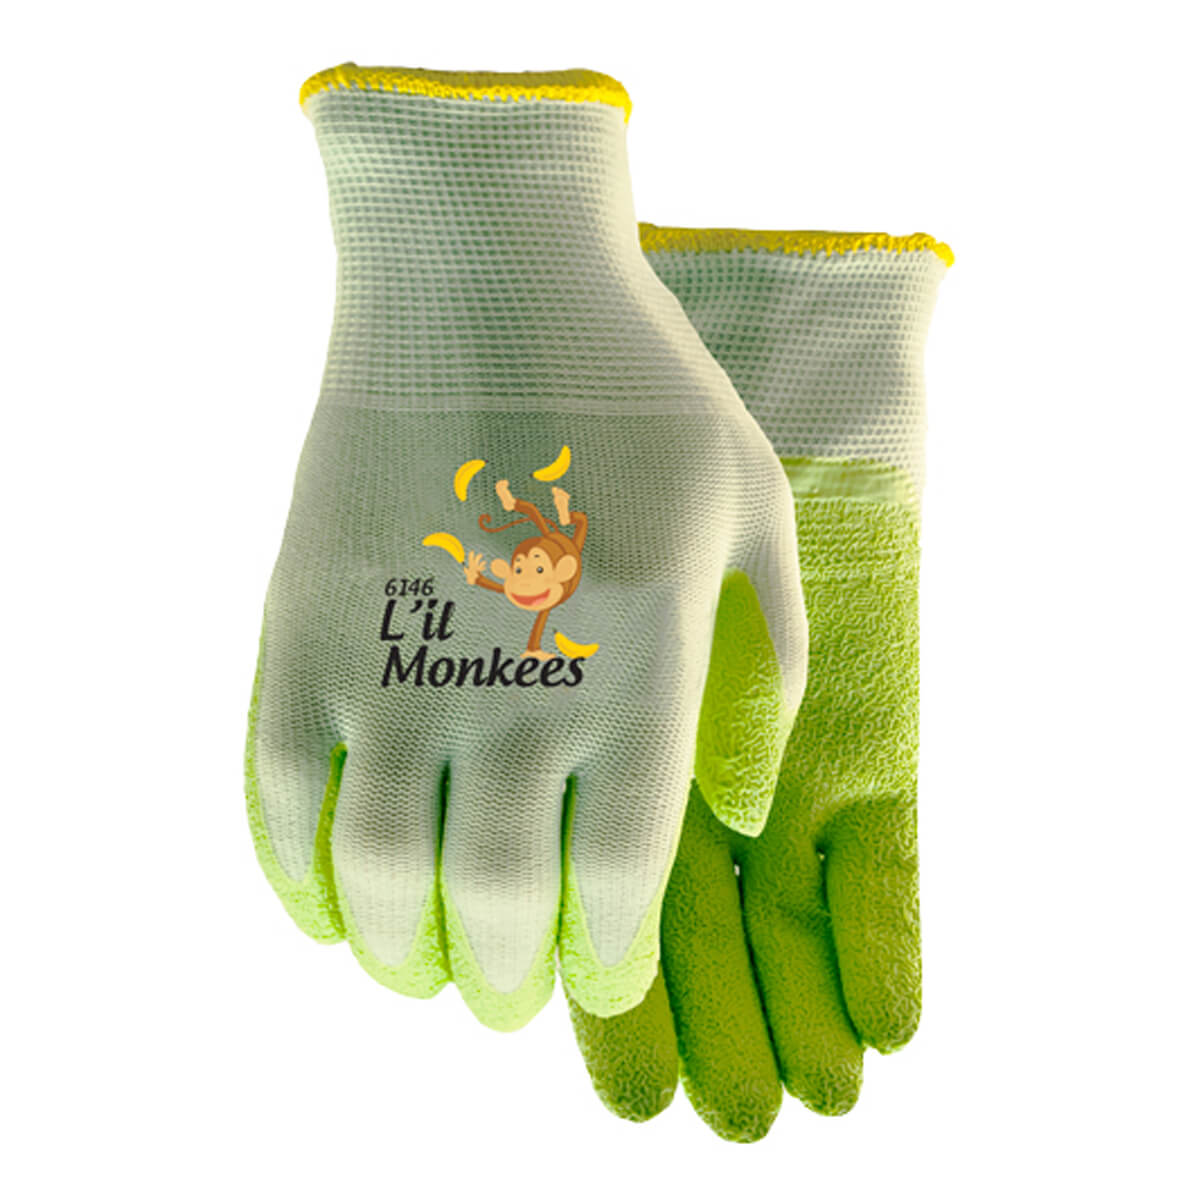 L'Il Monkees Gloves - XS